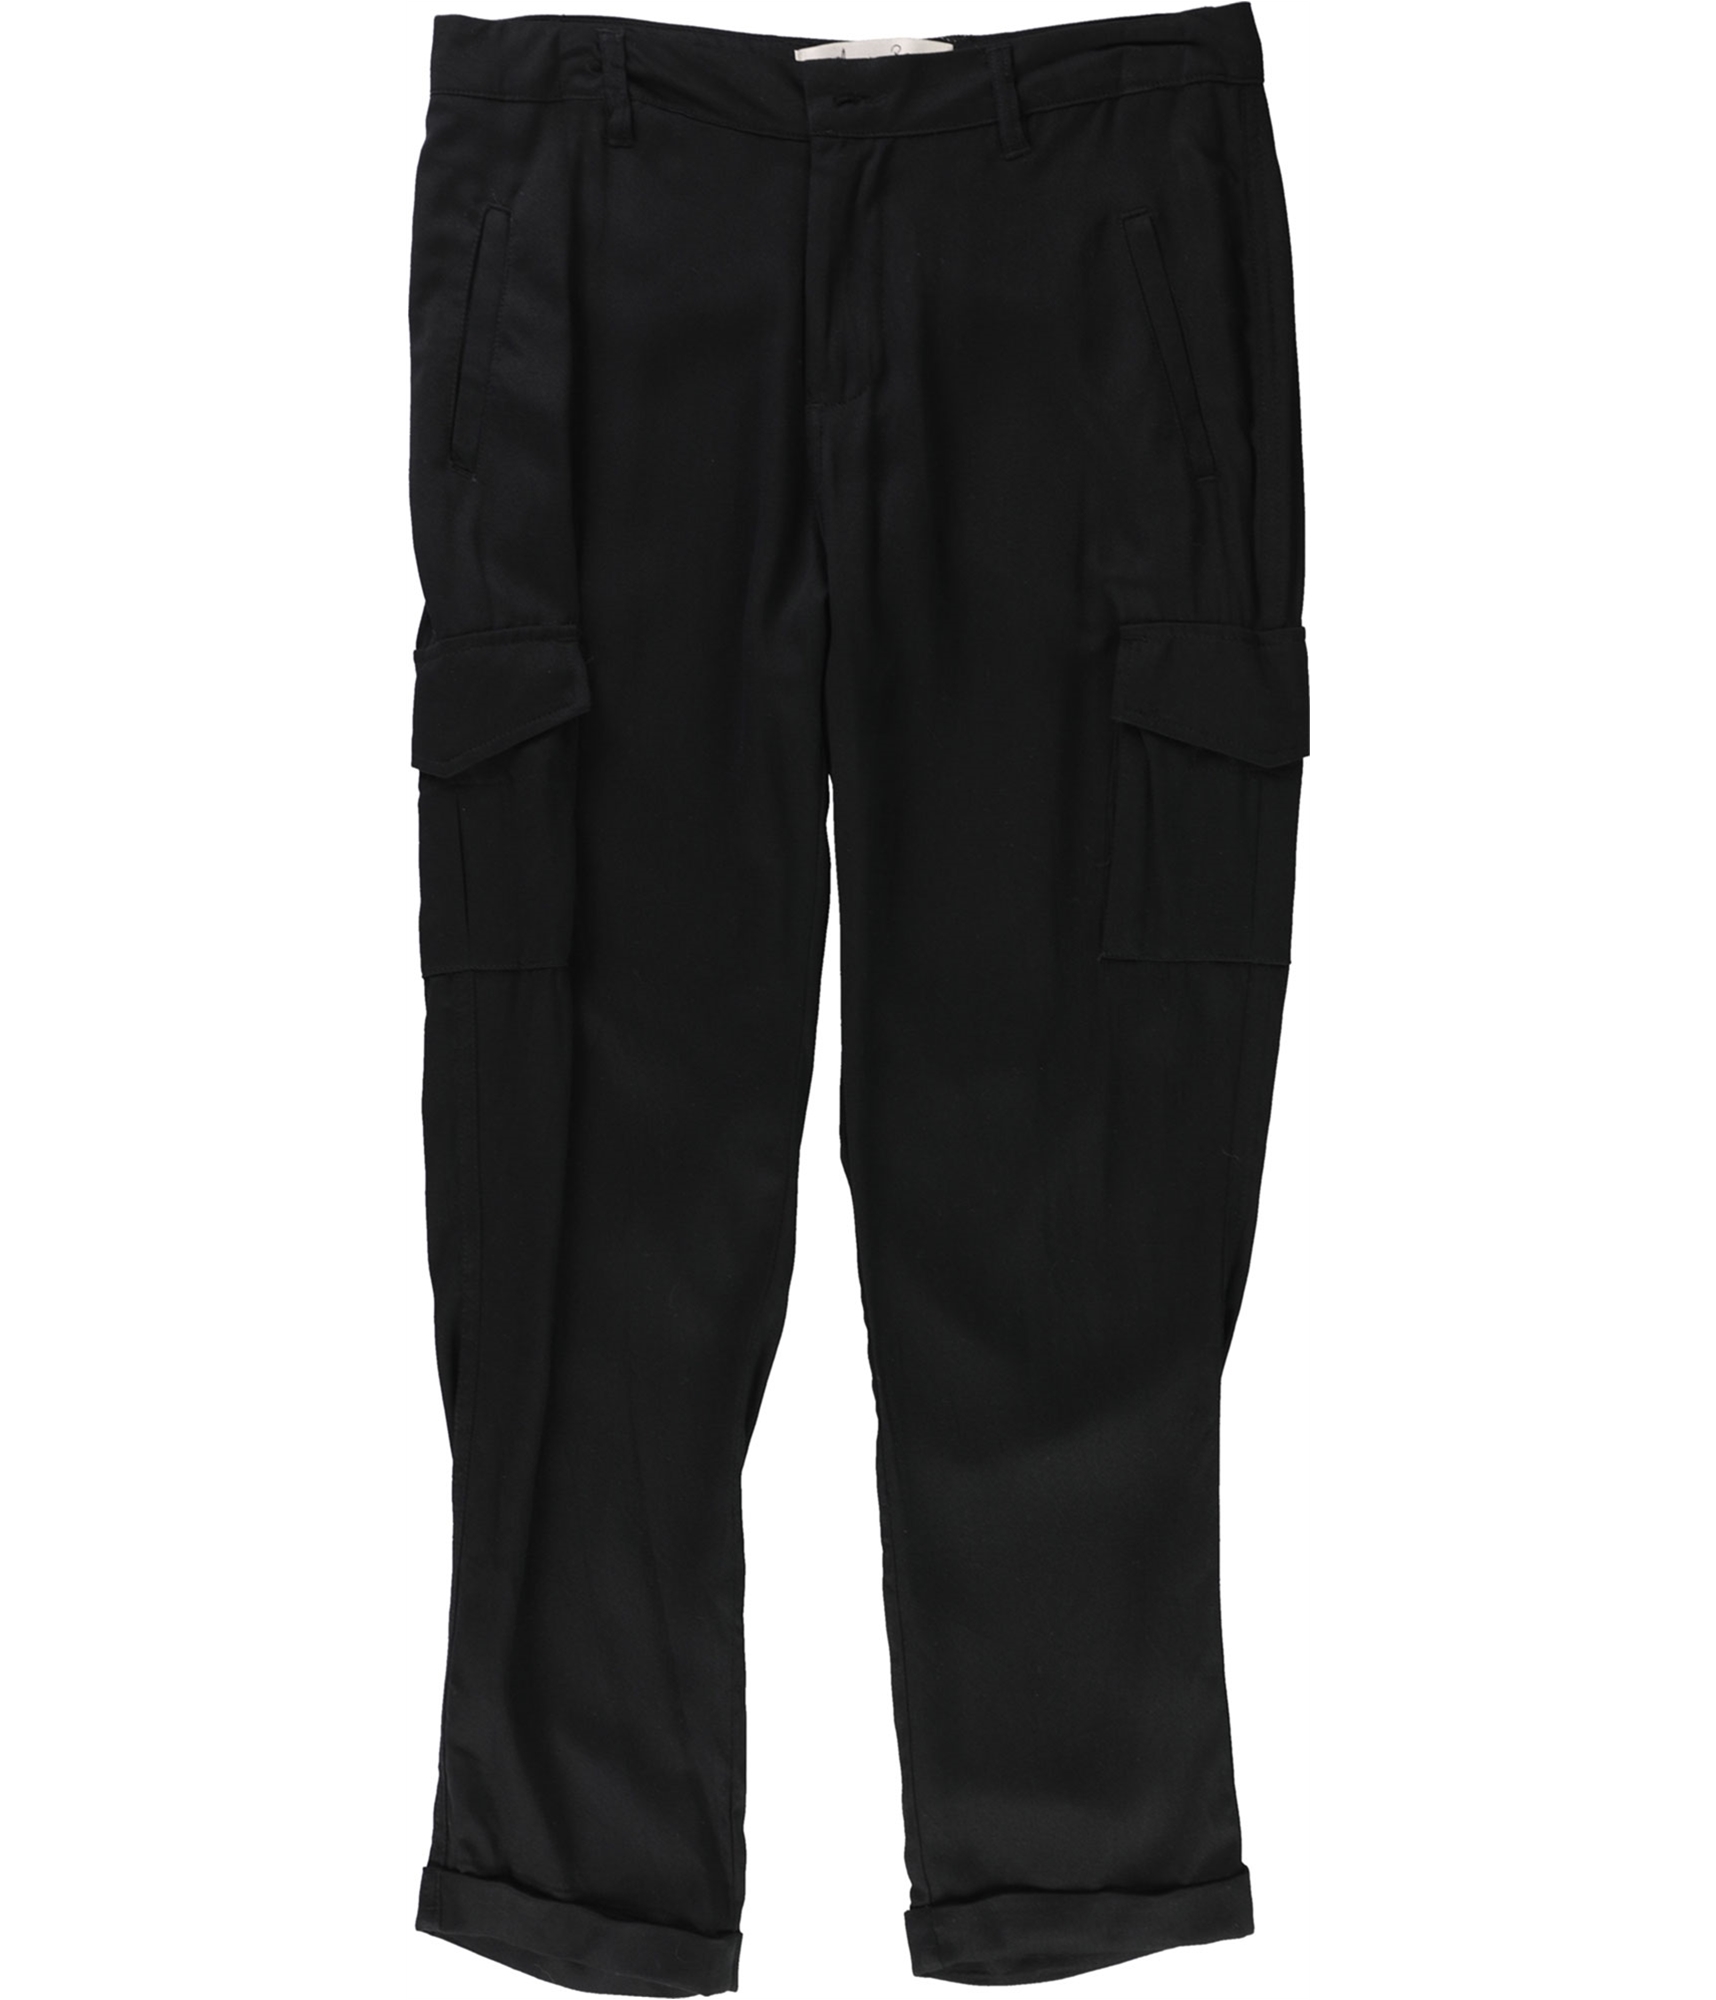 American Rag Womens Soft Casual Cargo Pants, Black, Small | eBay